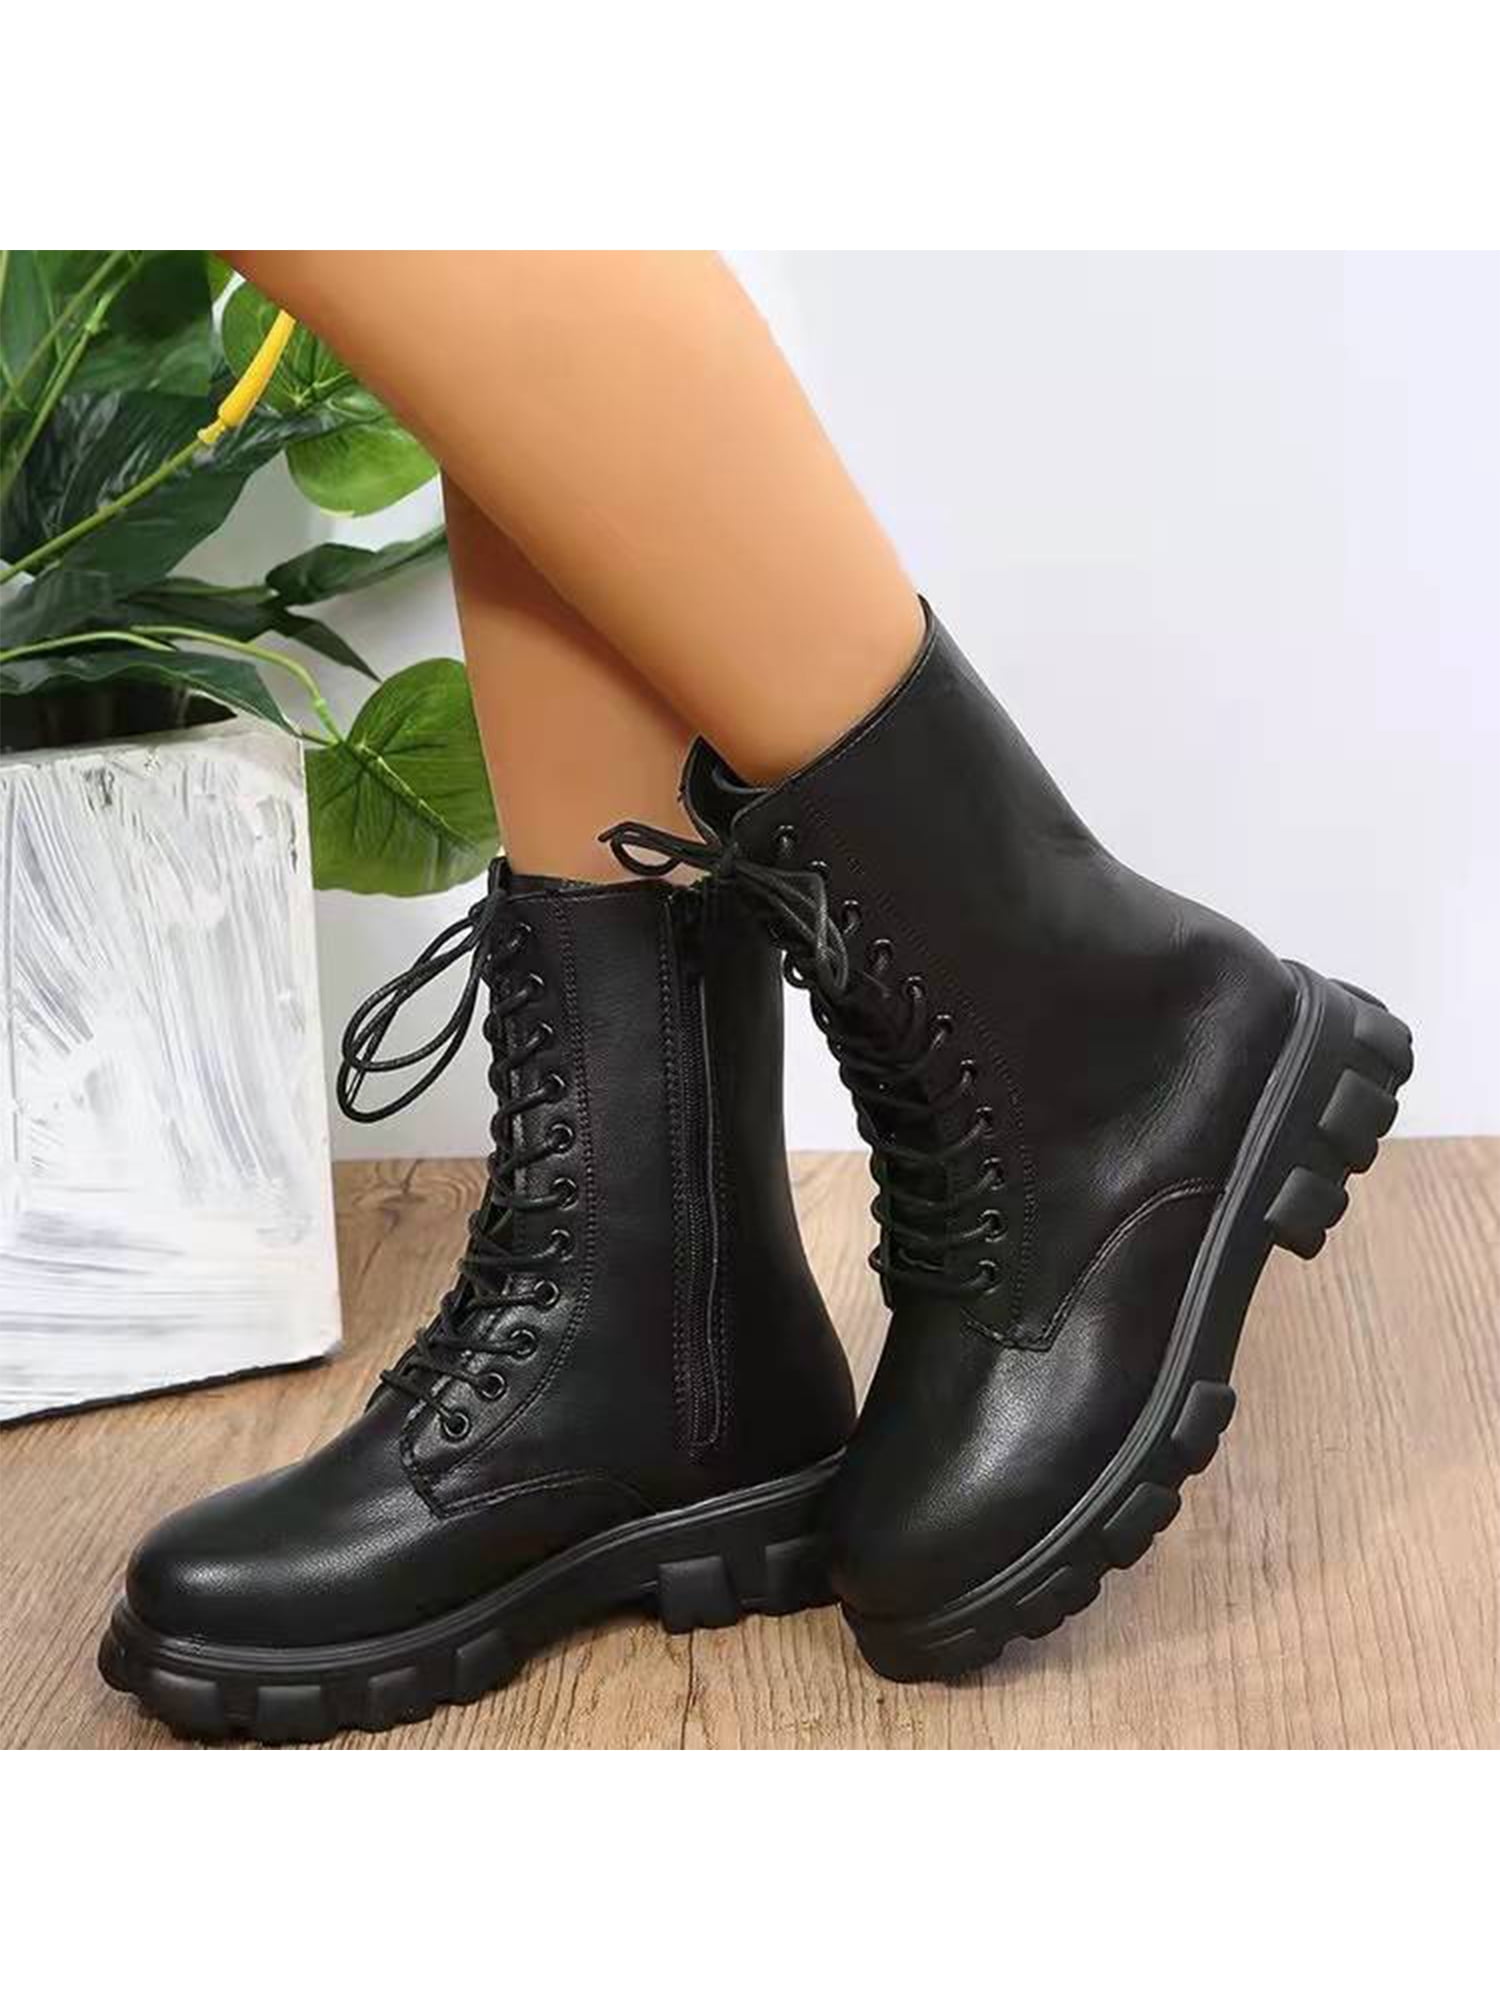 Walk the Line Boots | Combat boots heels, Boots, Heels